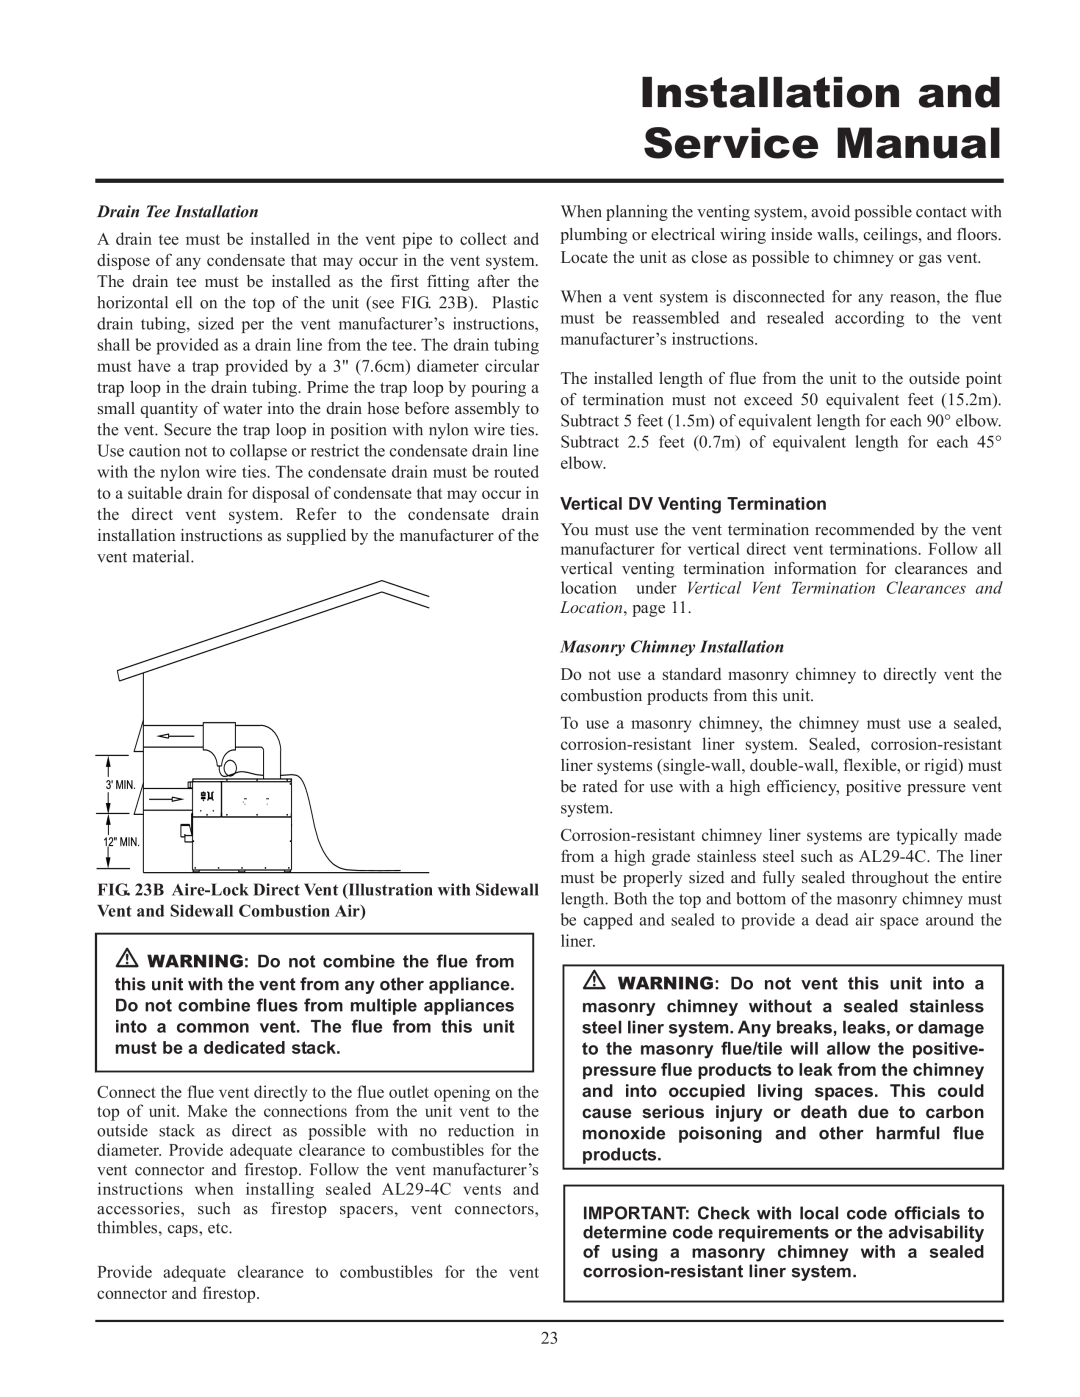 Lochinvar 399, 999 - 750 Vertical DV Venting Termination, Installation and Service Manual, Drain Tee Installation 